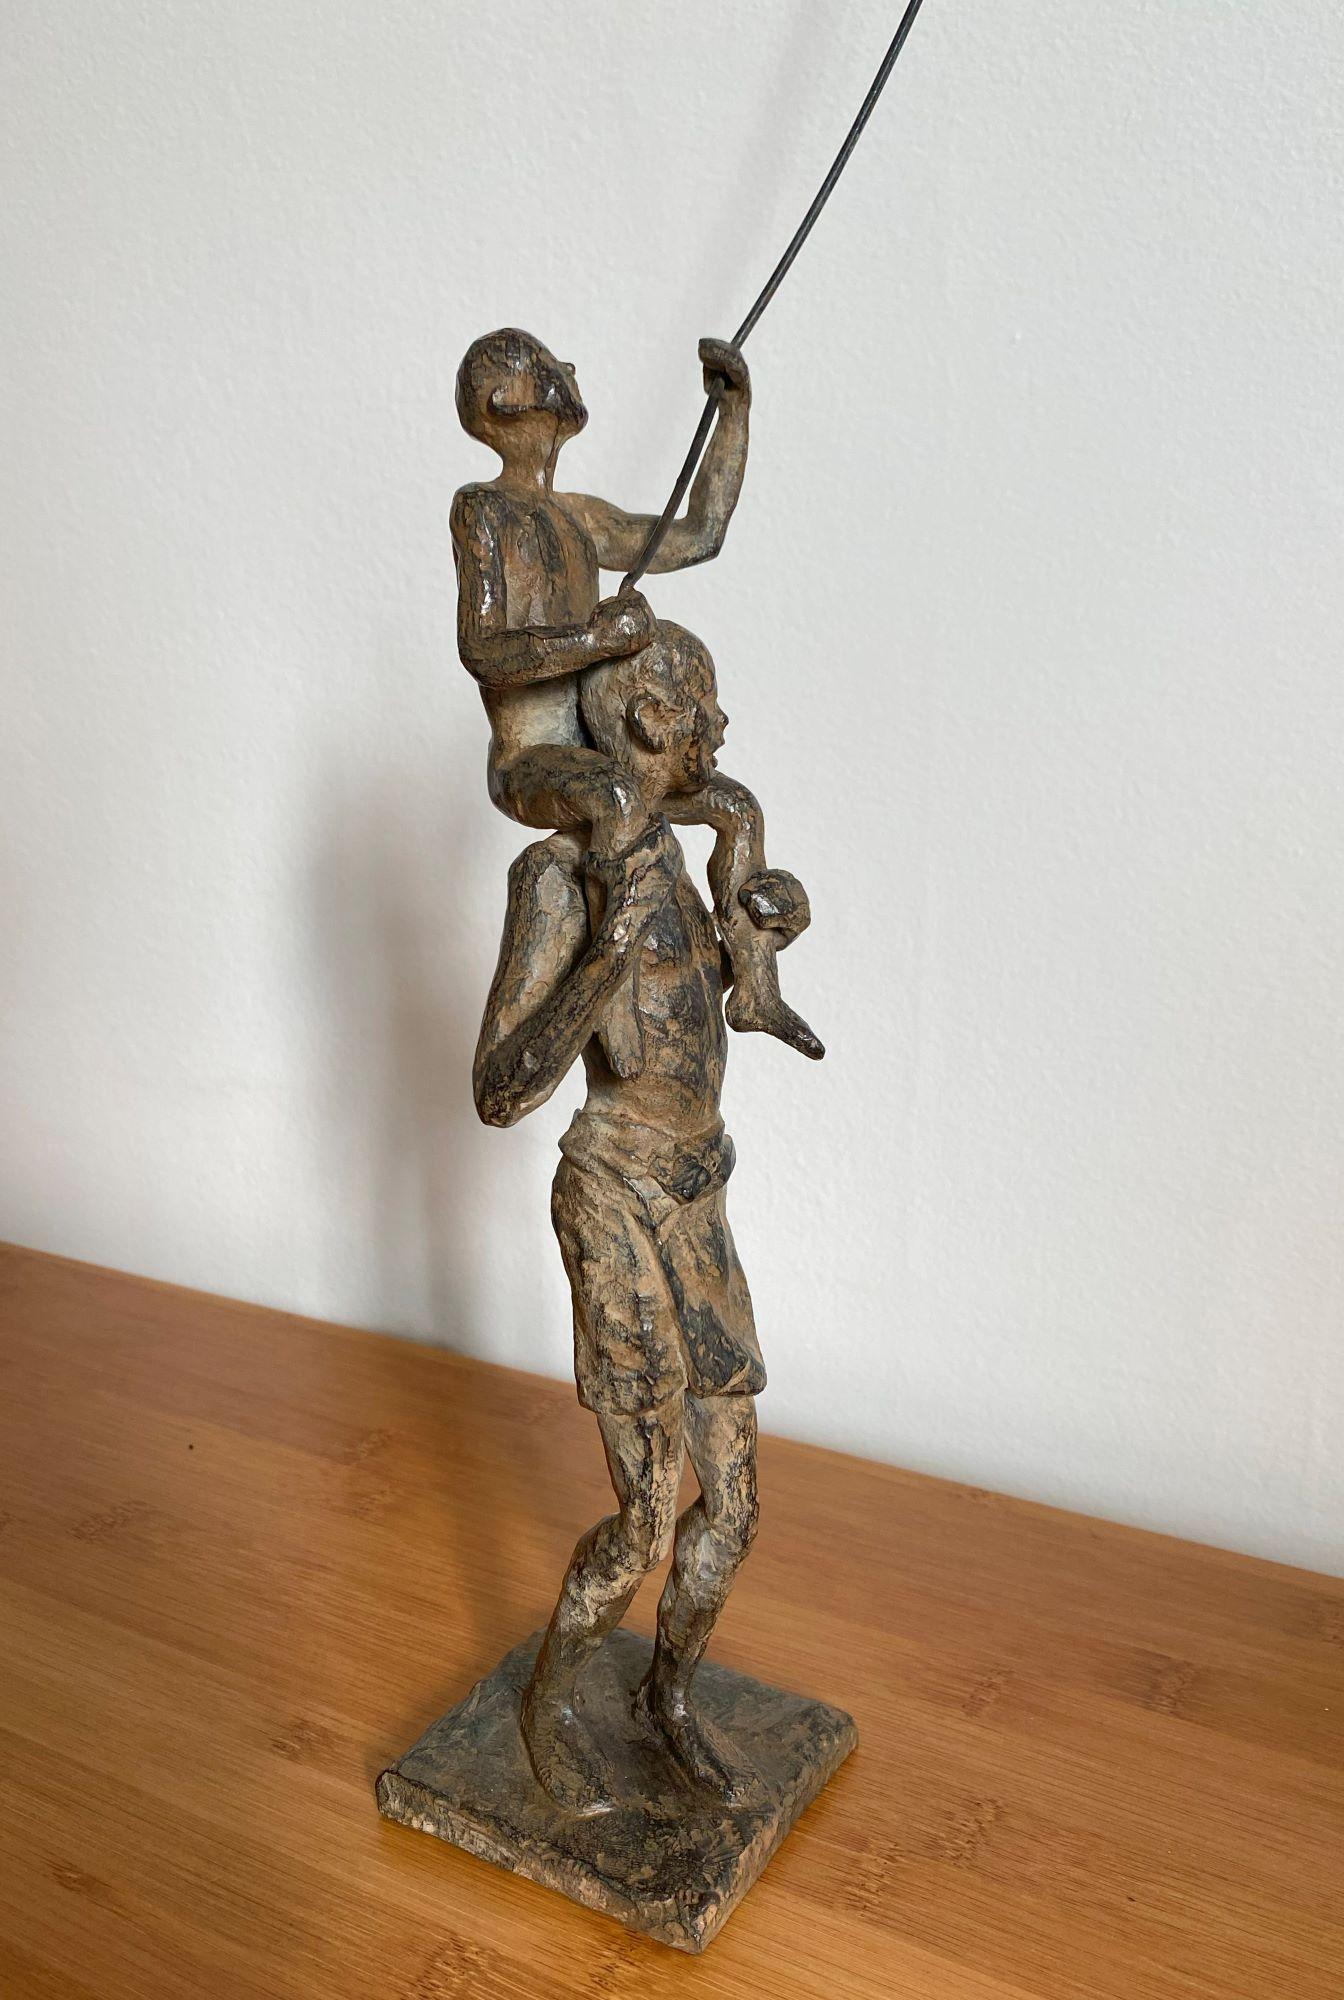 Childhood’s Sail VI by Marine de Soos - Bronze sculpture, child's figure, kite For Sale 7